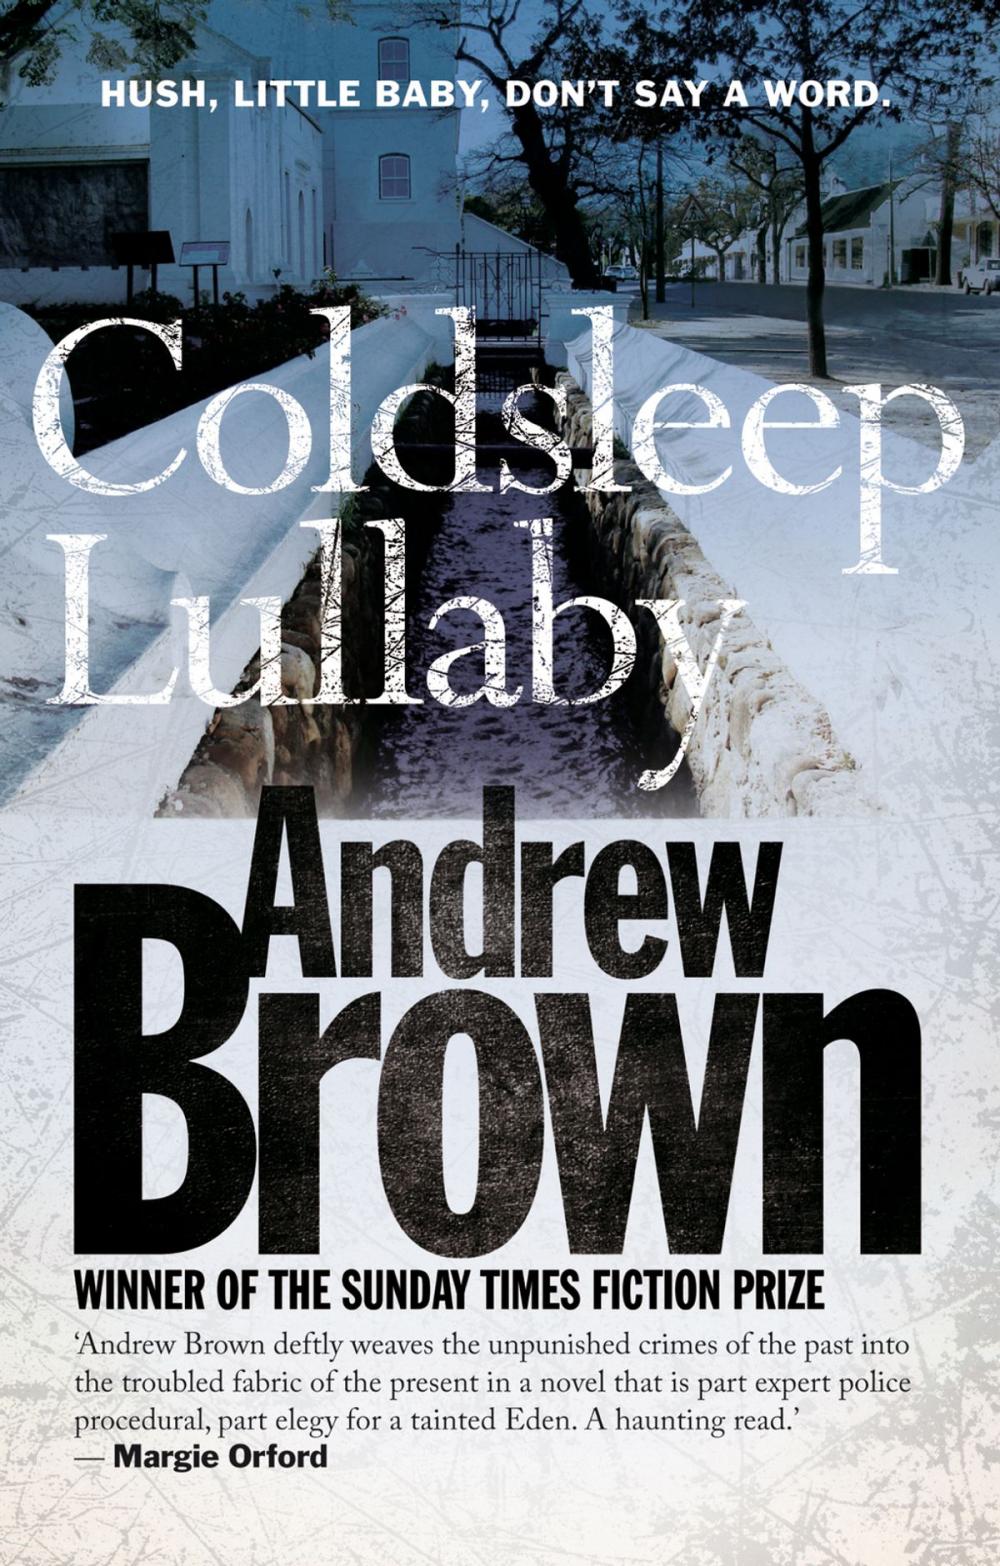 Big bigCover of Coldsleep Lullaby